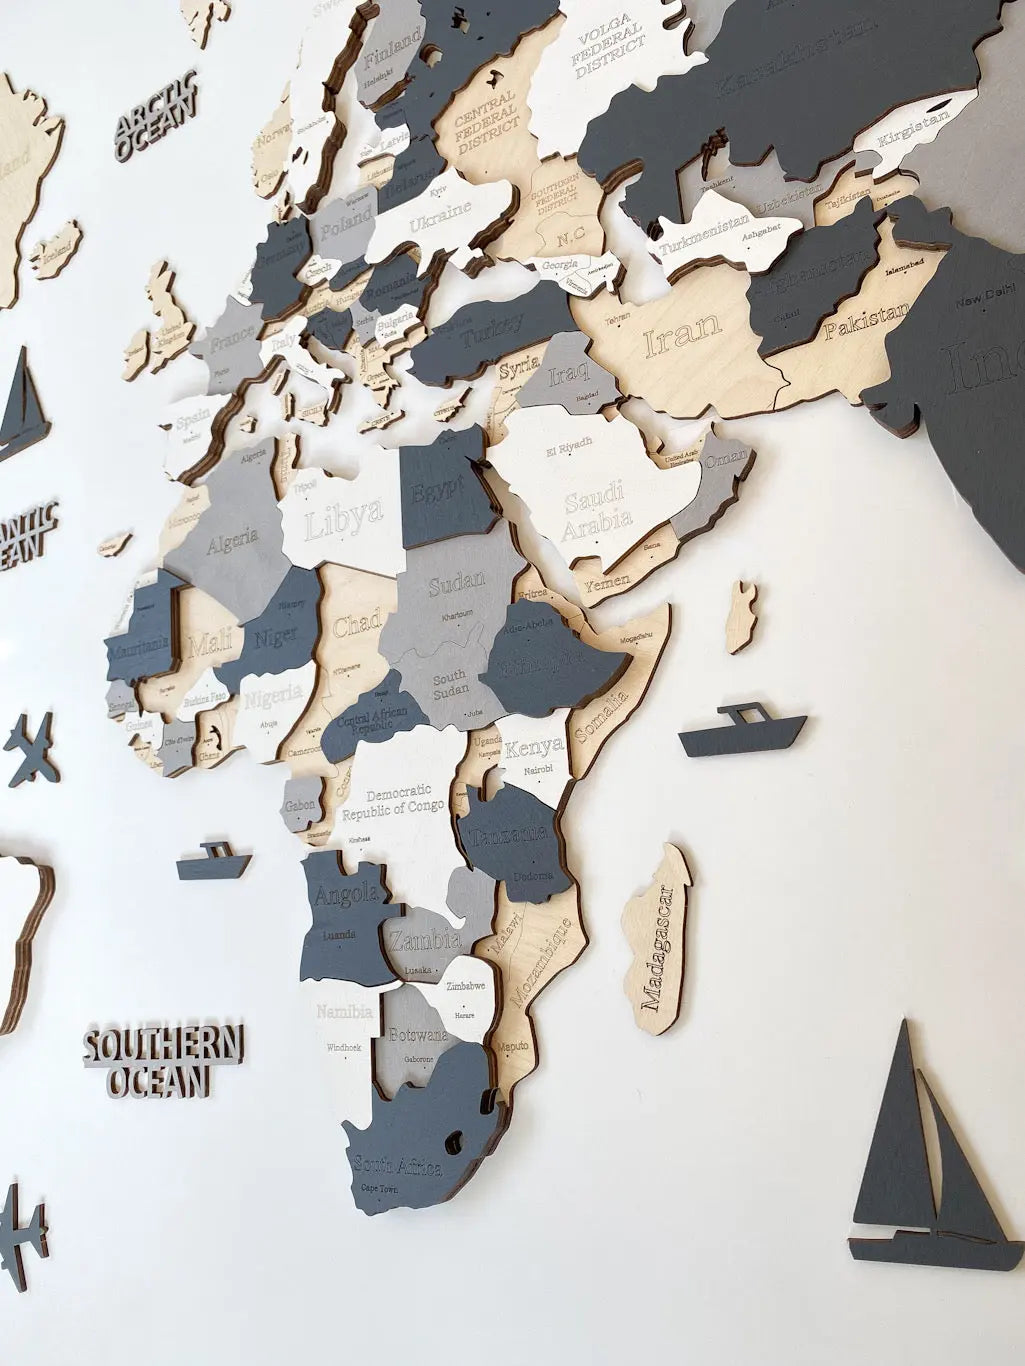 3D WOODEN WORLD MAP "ALASKA" - WoodLeo